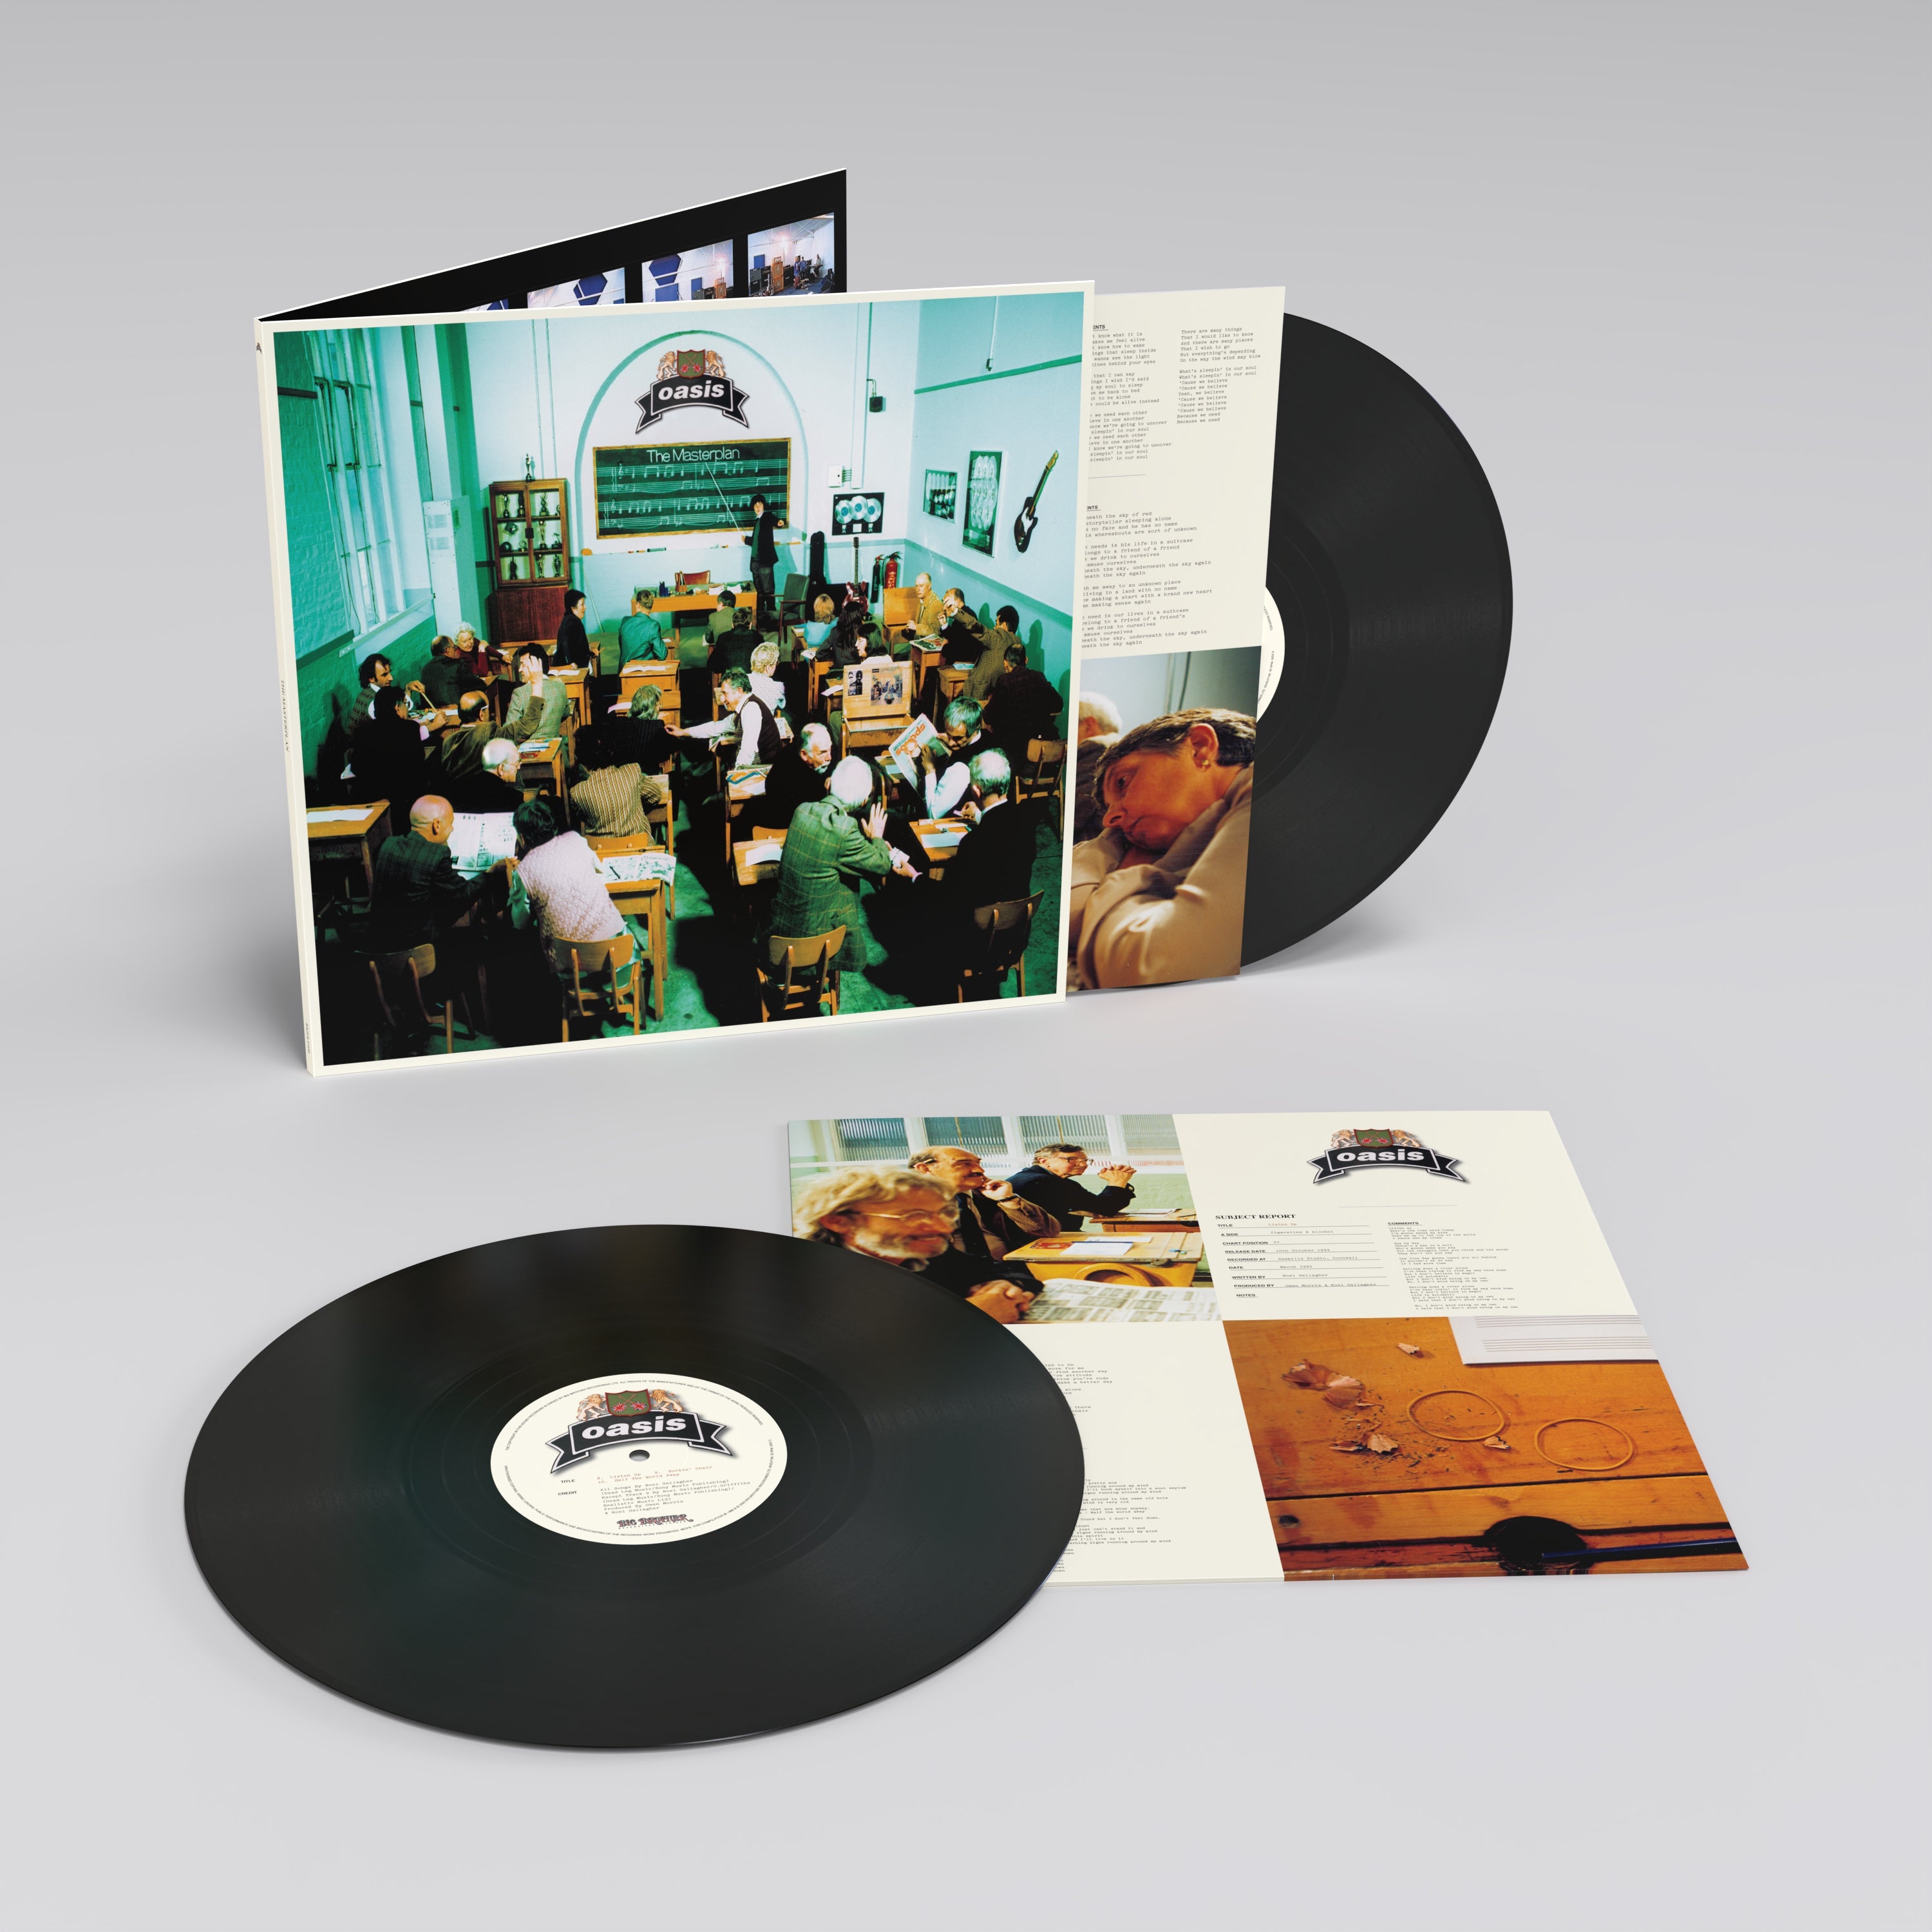 Oasis - 'The Masterplan' 25th Anniversary Reissue 2LP